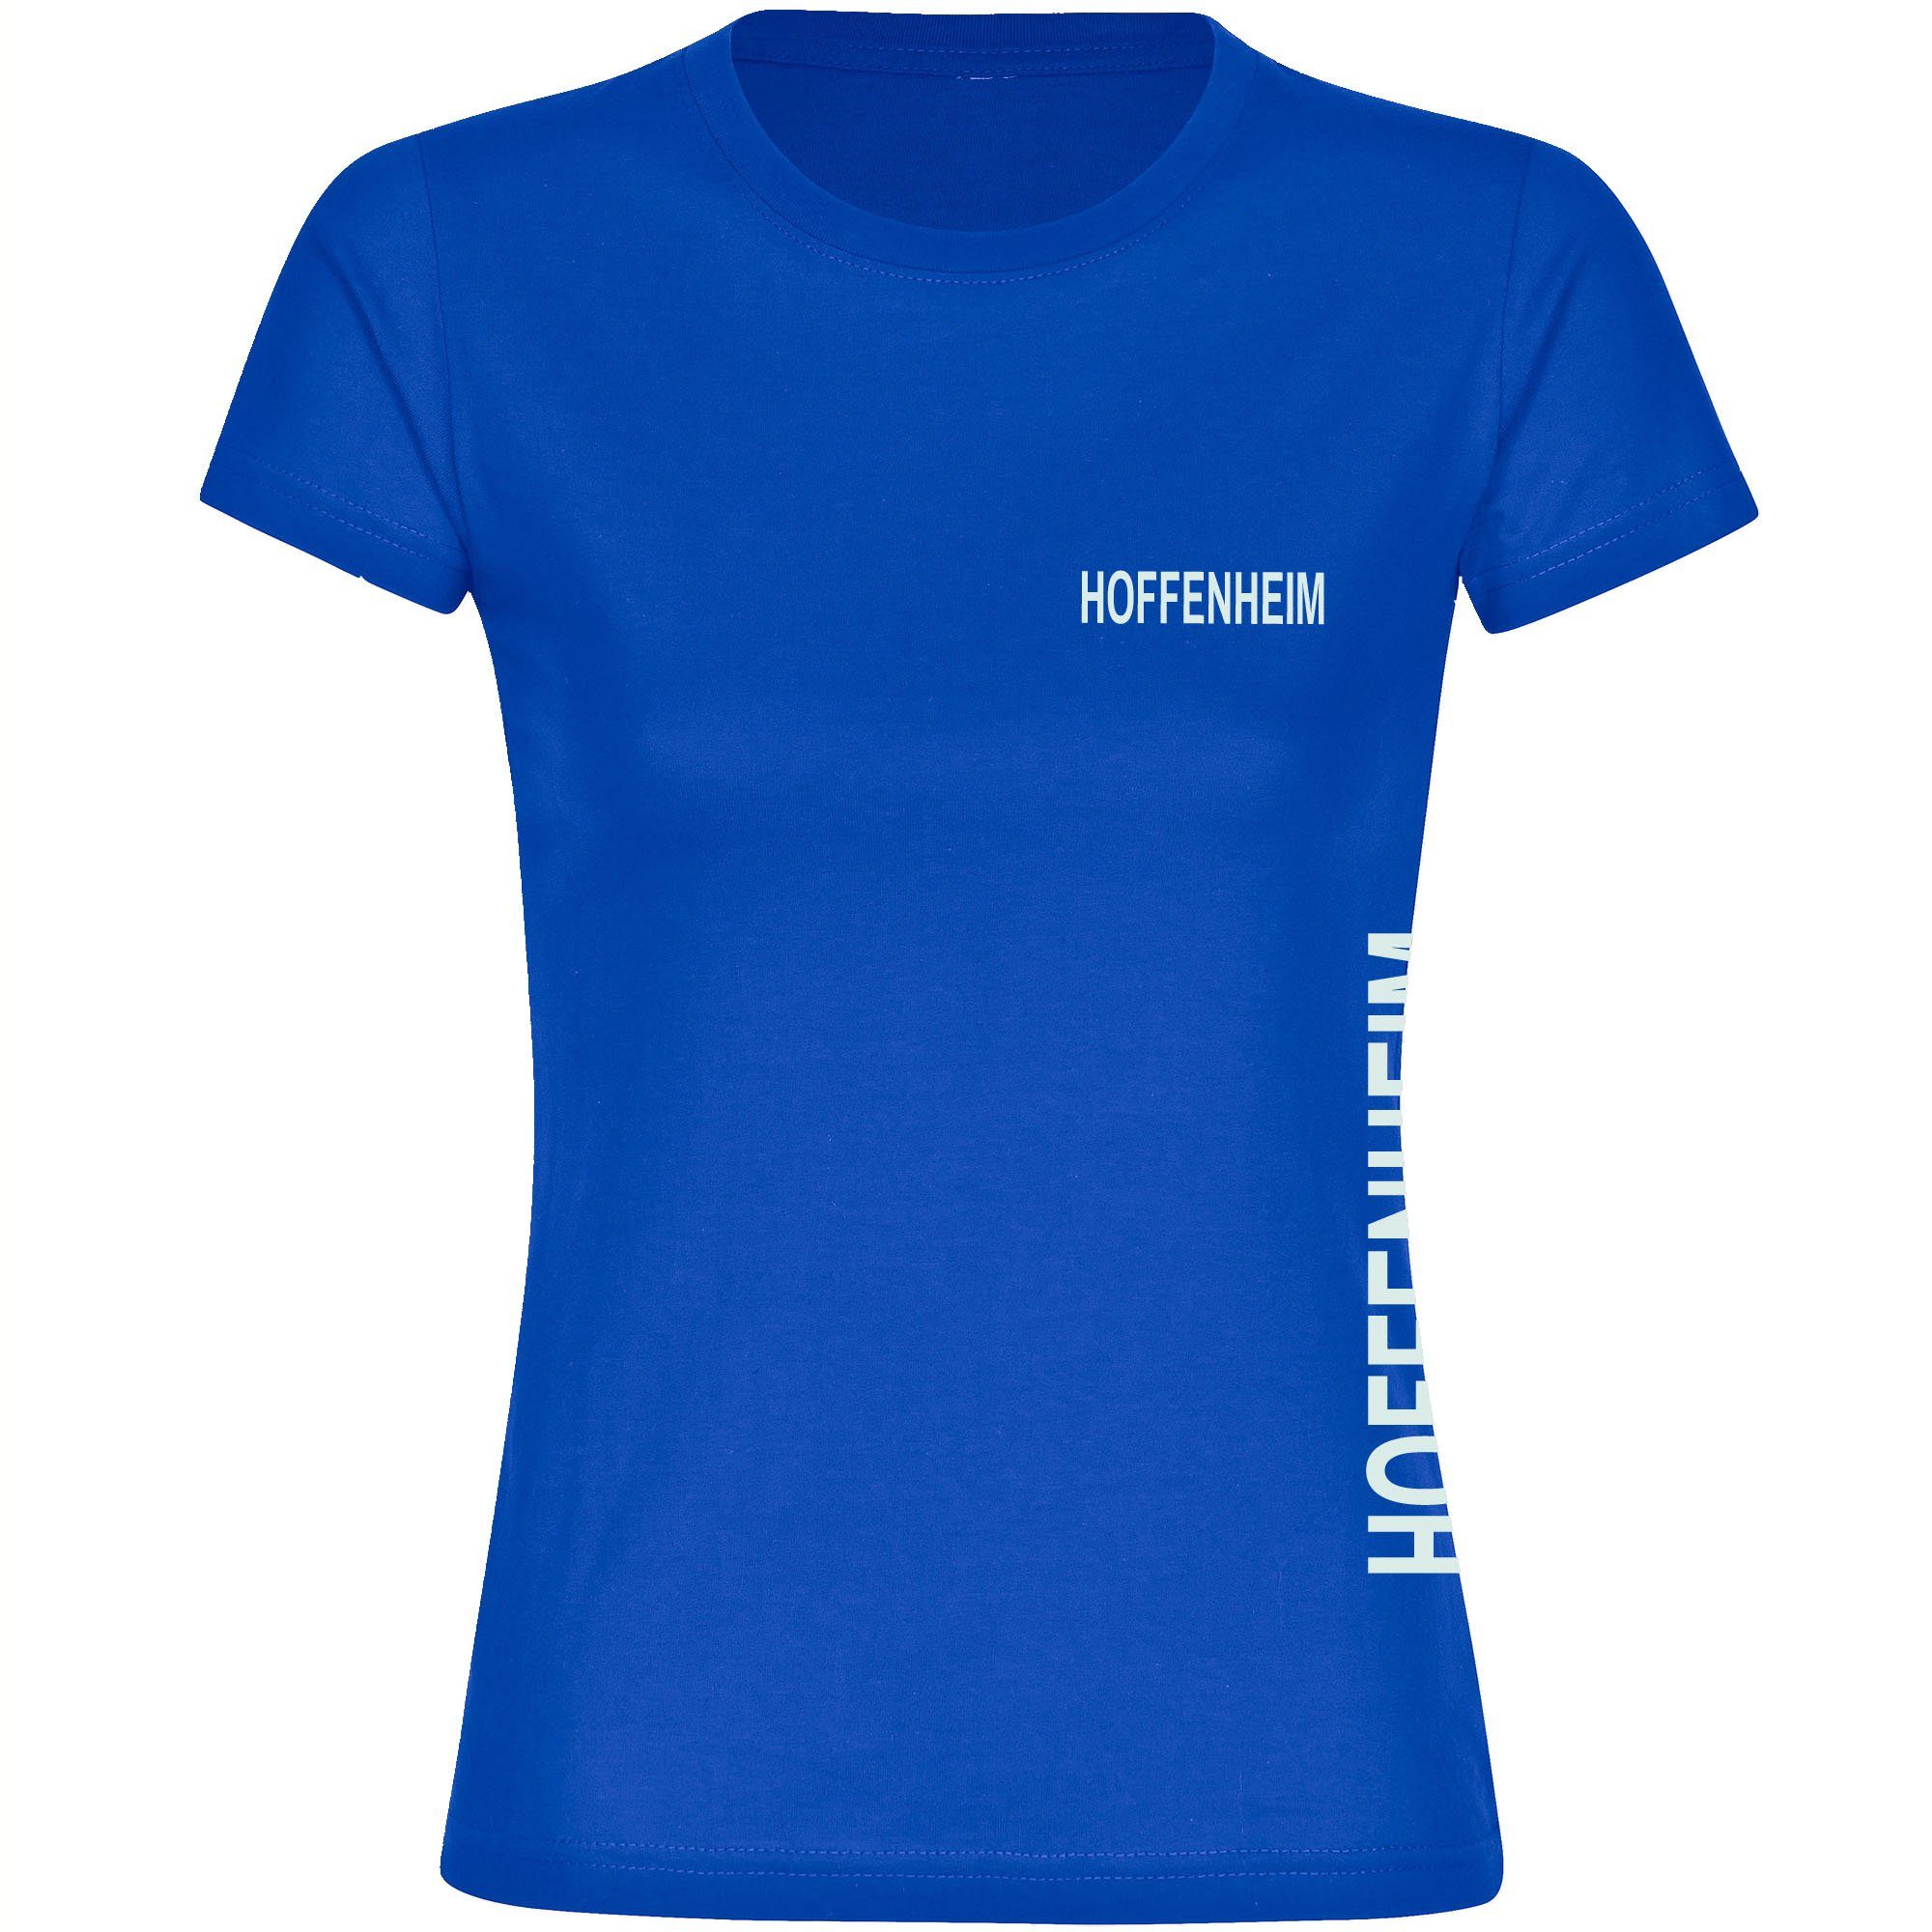 multifanshop T-Shirt Damen Hoffenheim - Brust & Seite - Frauen